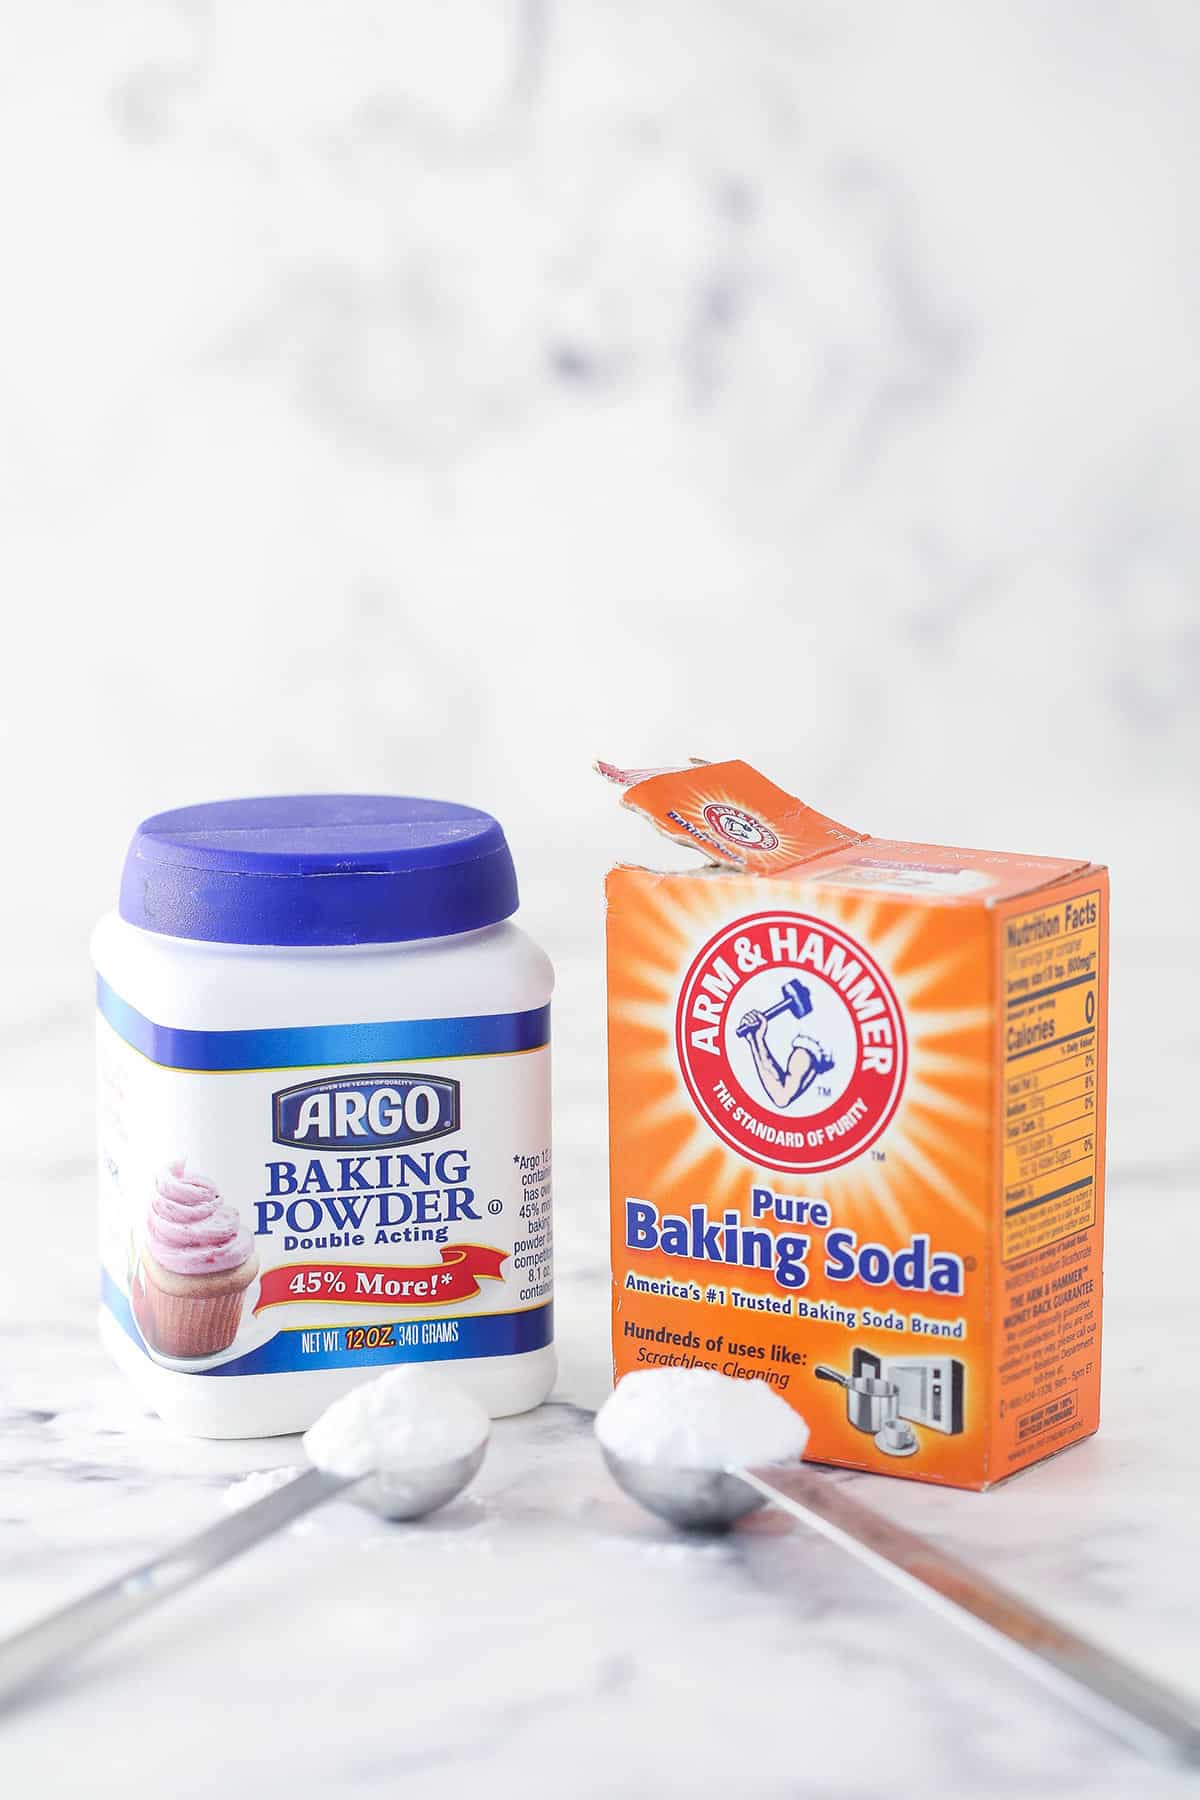 Baking Soda vs Baking Powder